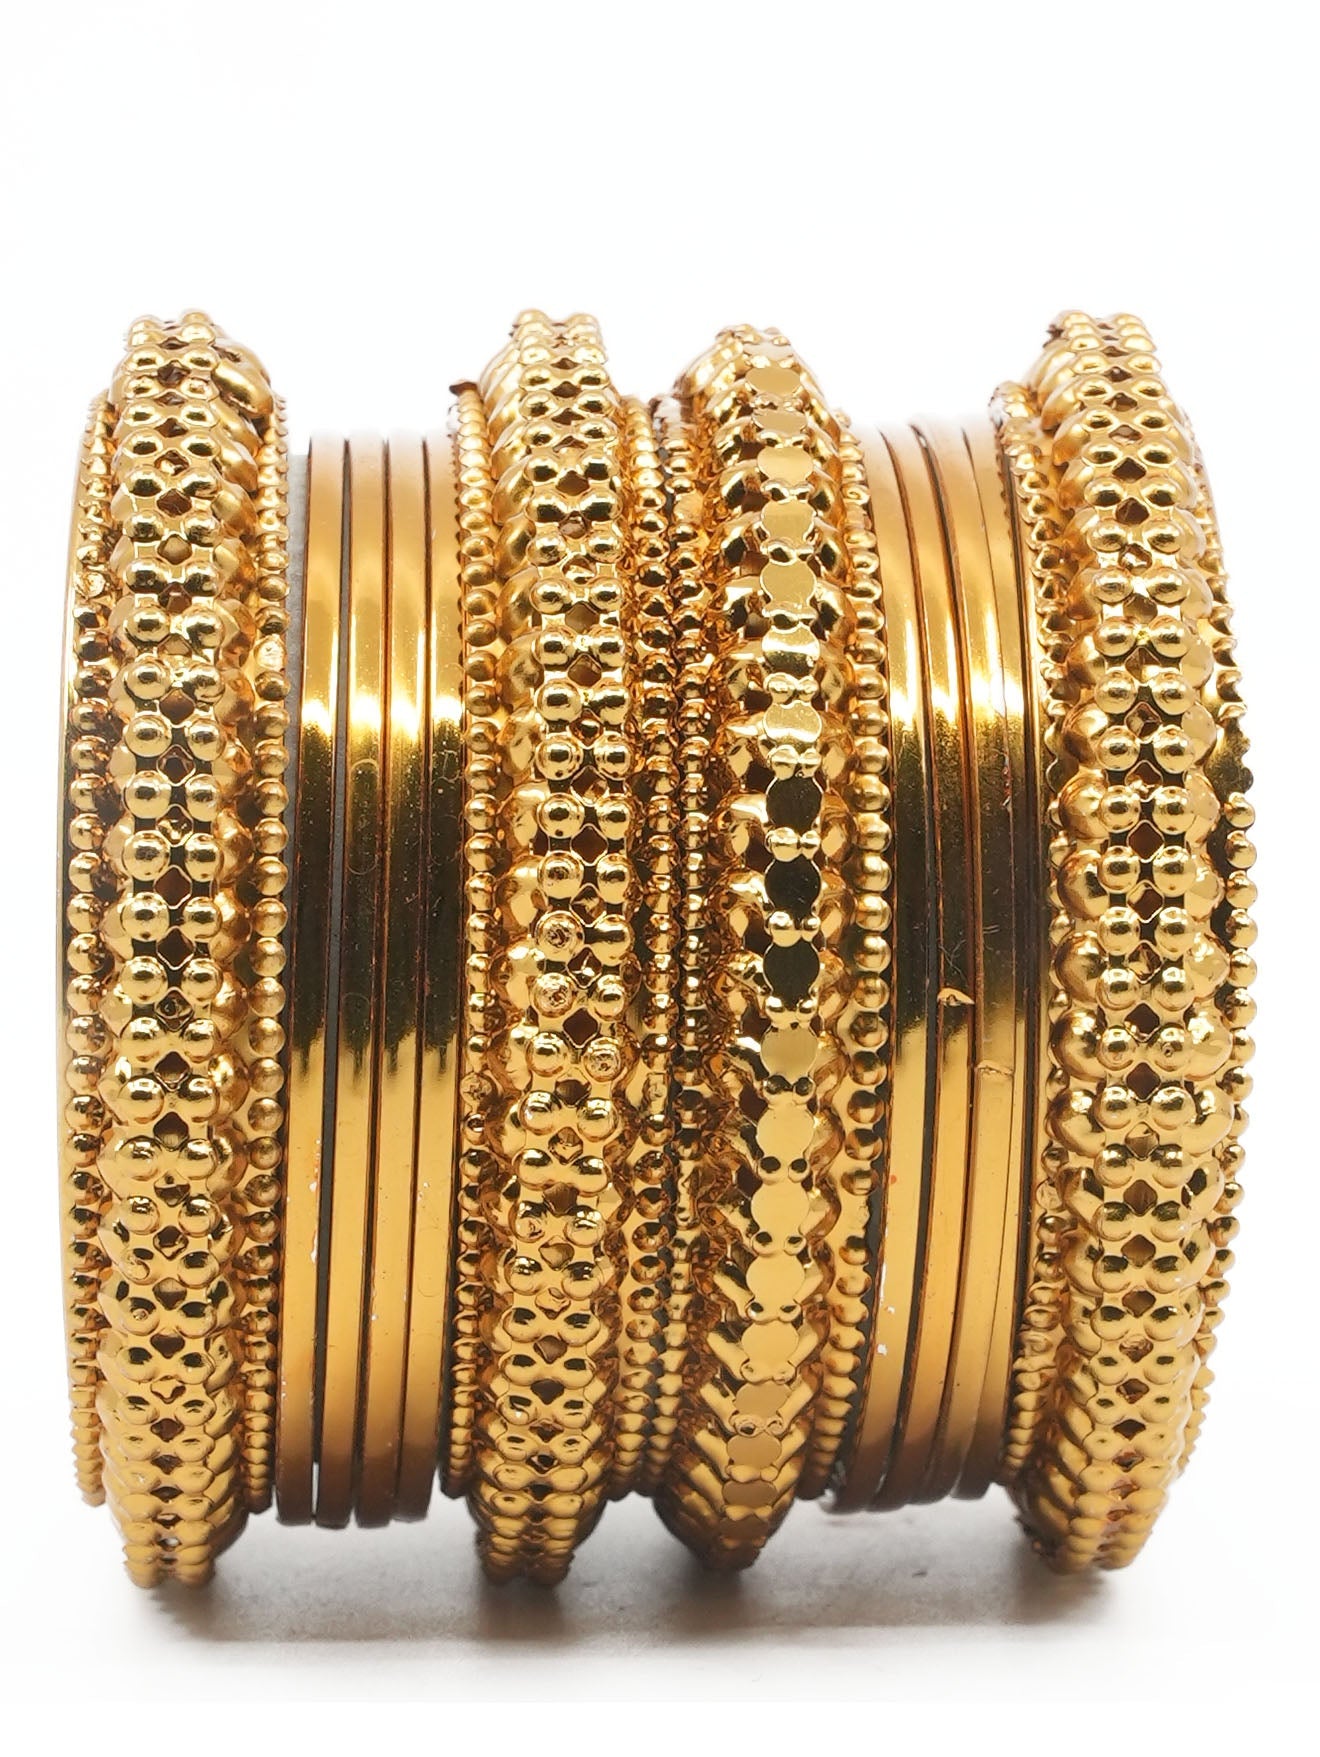 Fancy Mehendi Gold Plated Bangles Set of 12 bangles 11437K